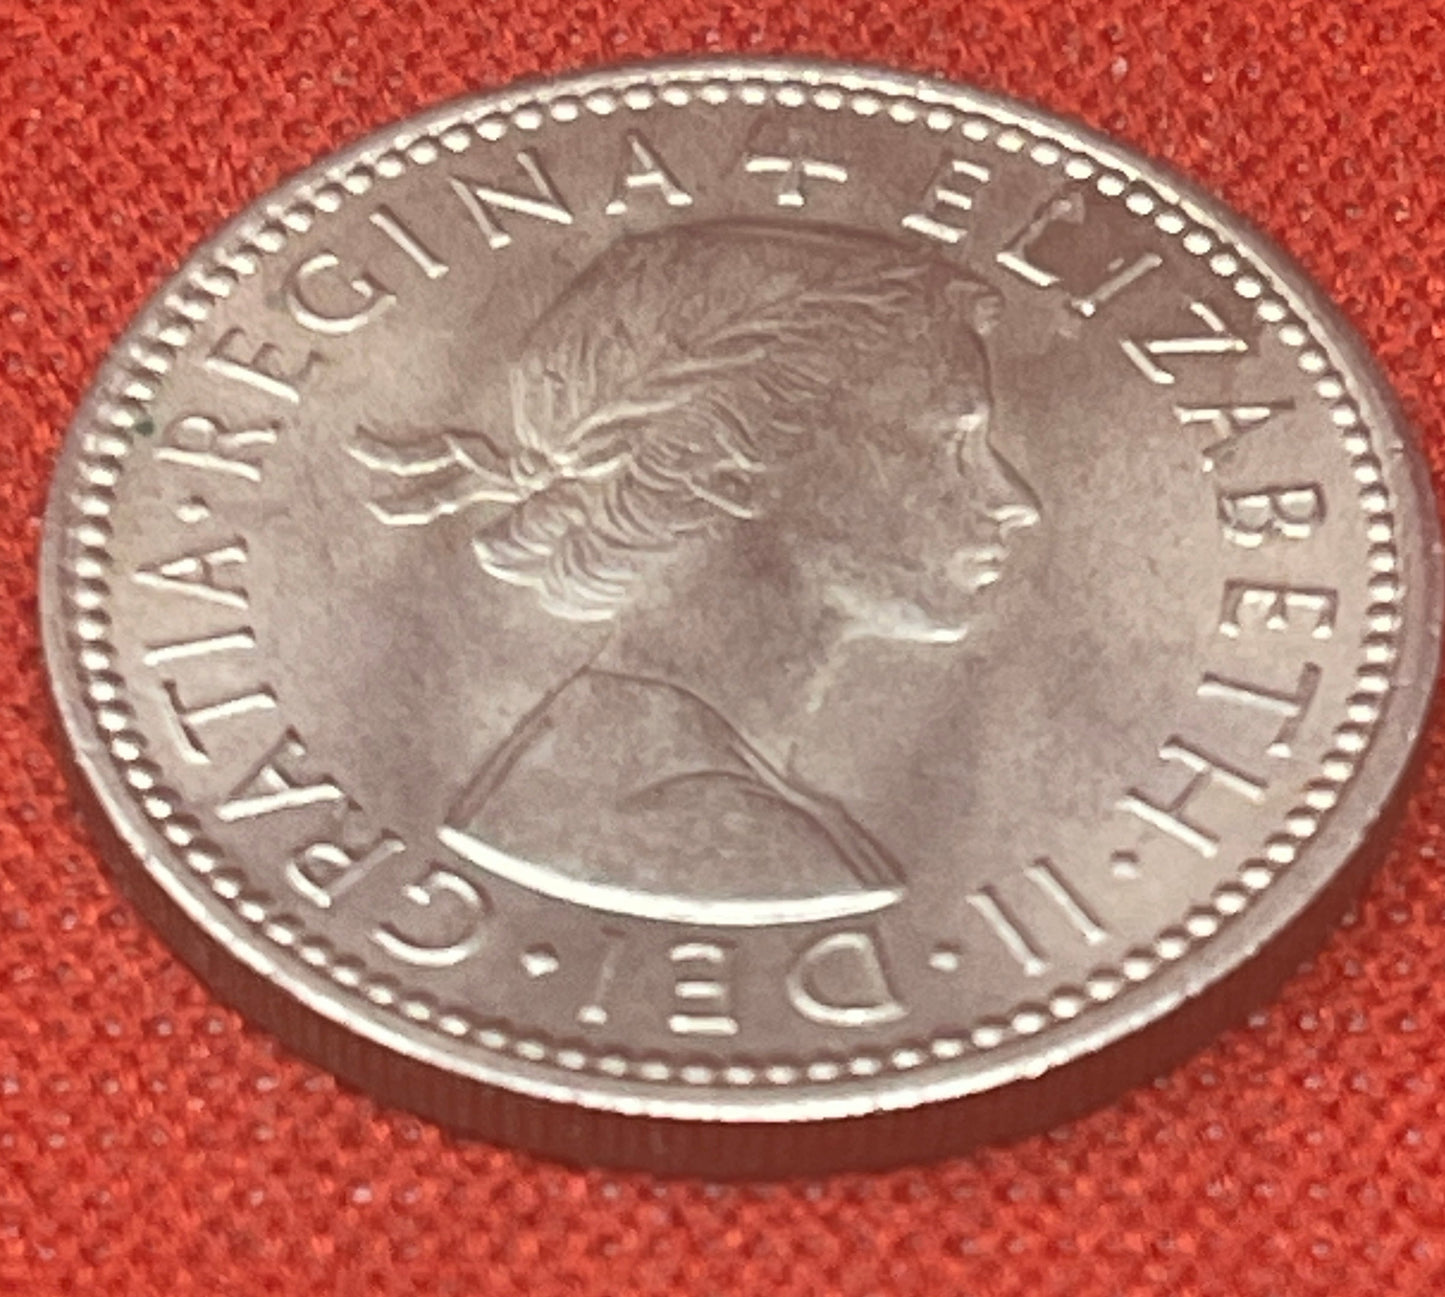 1966 Queen Elisabeth II One Shilling